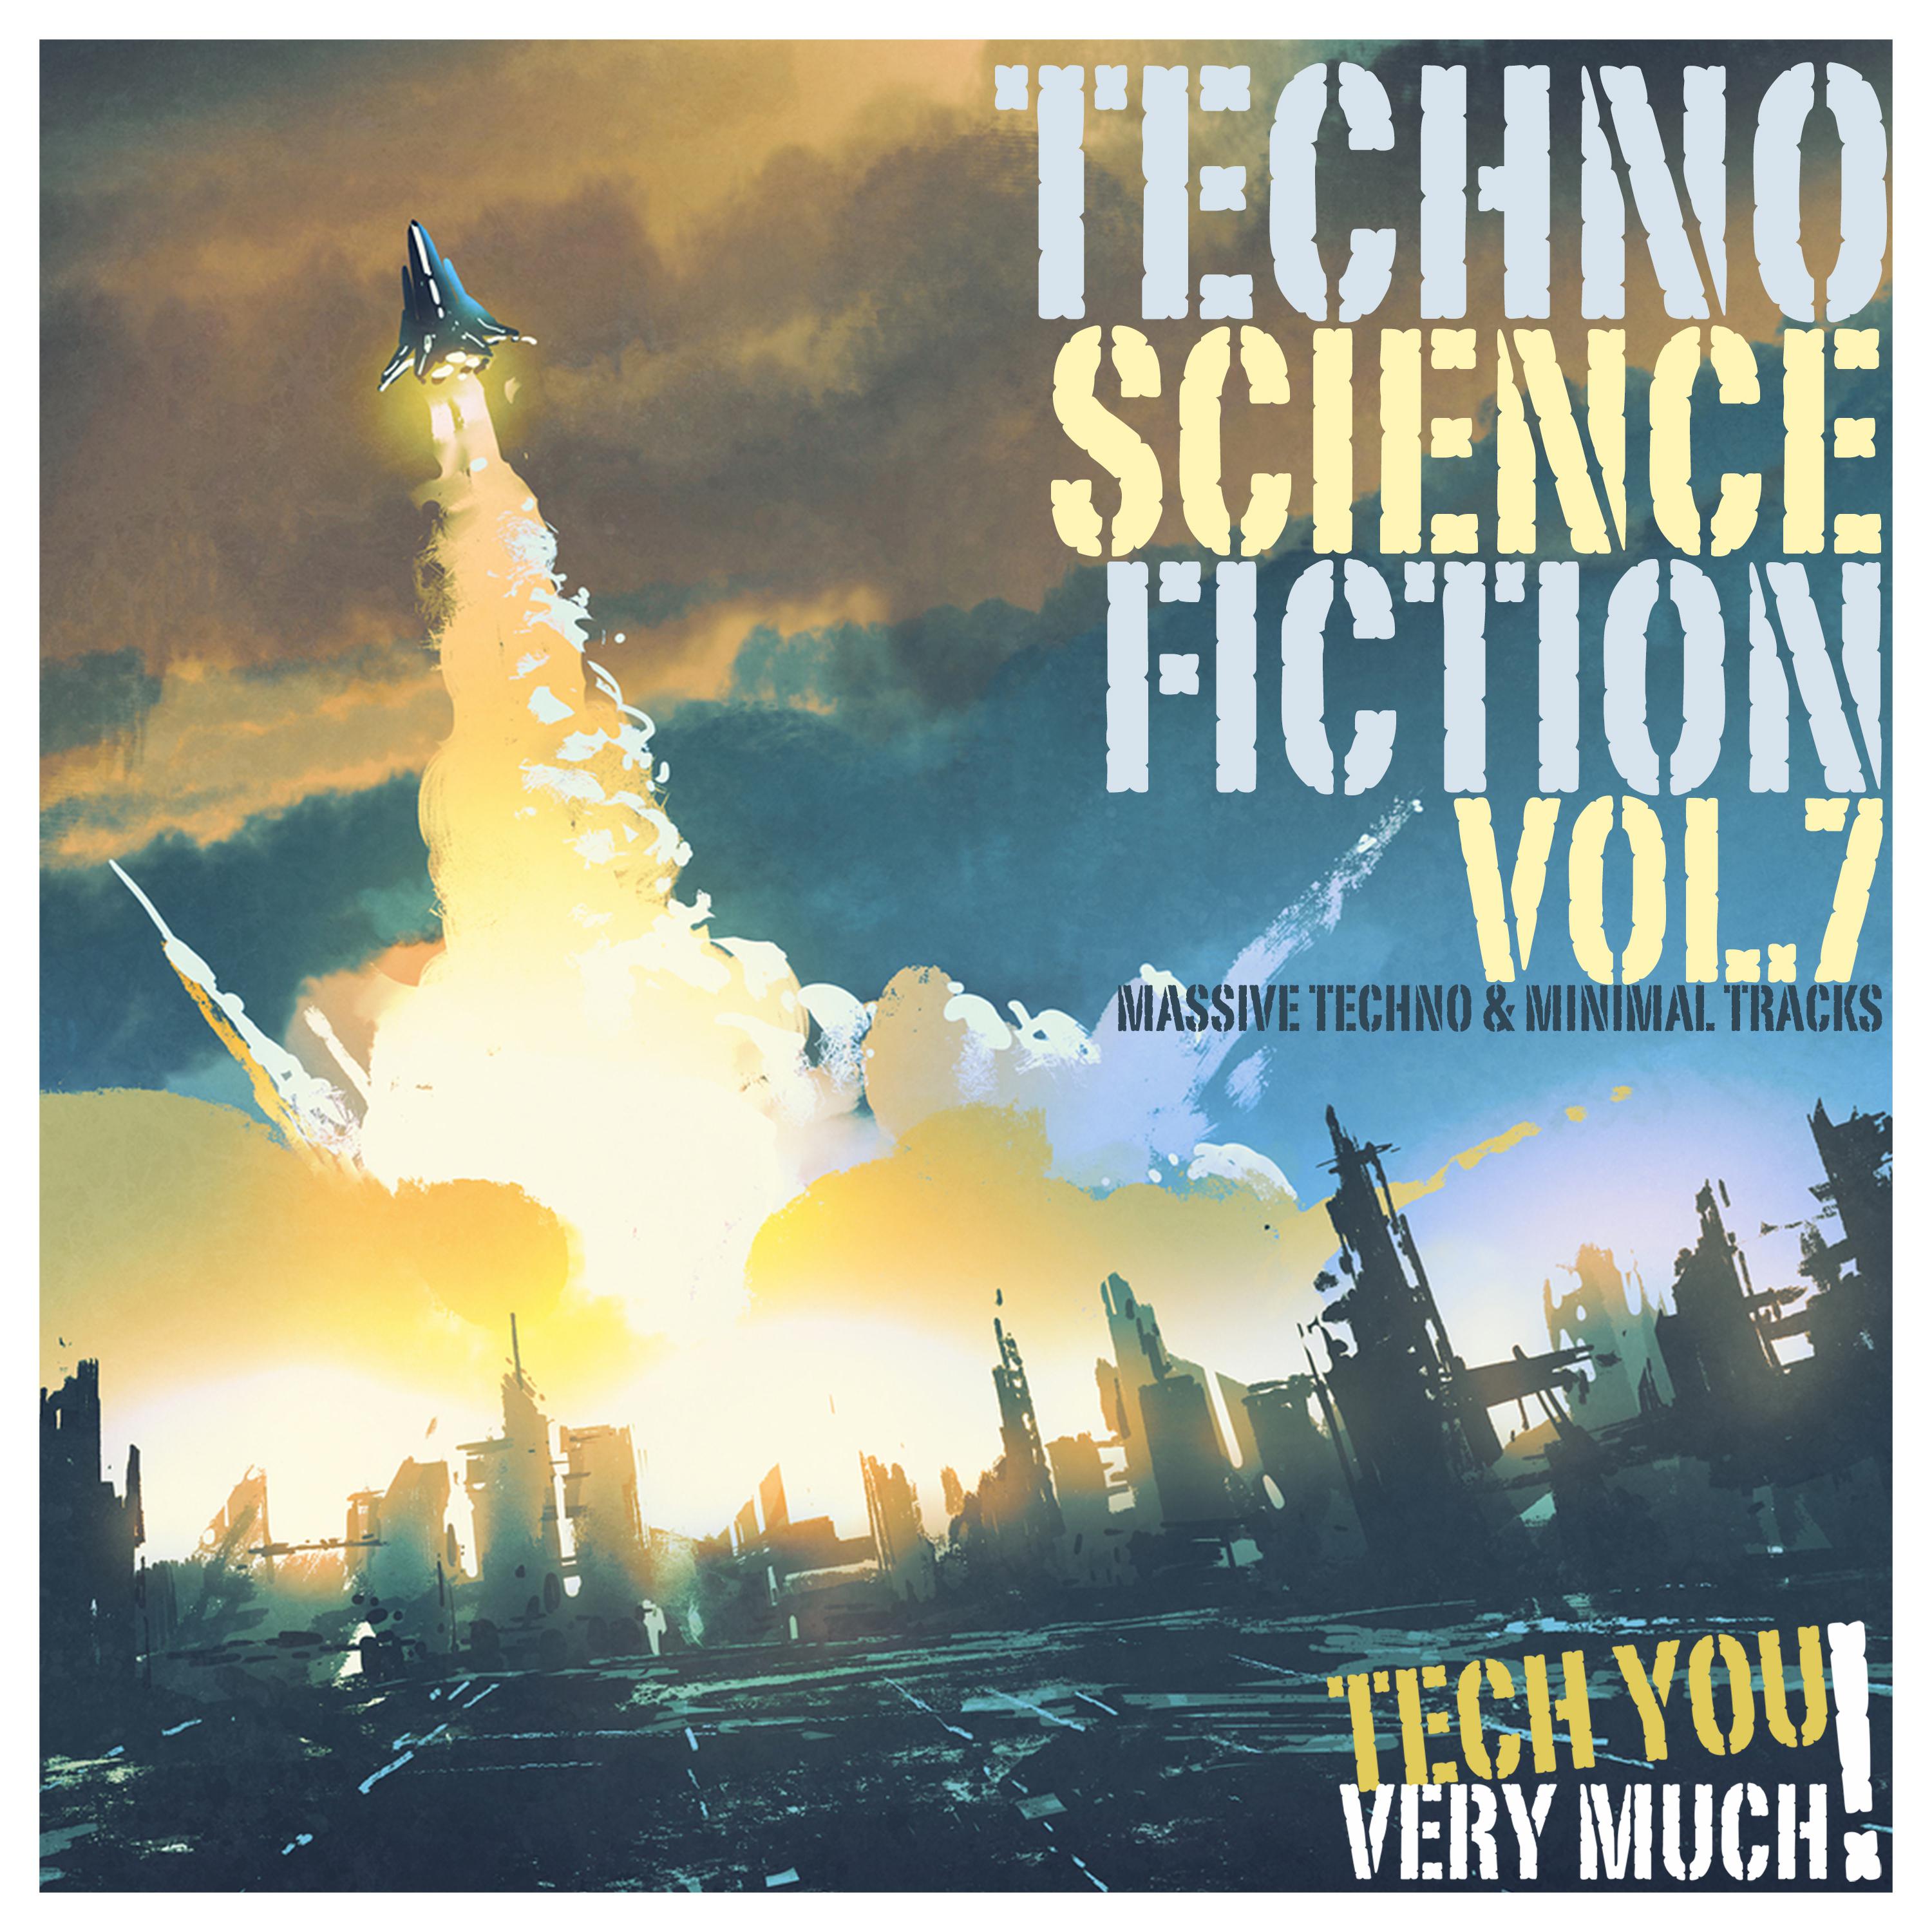 Techno Science Fiction, Vol. 7 (Massive Techno & Minimal Tracks)